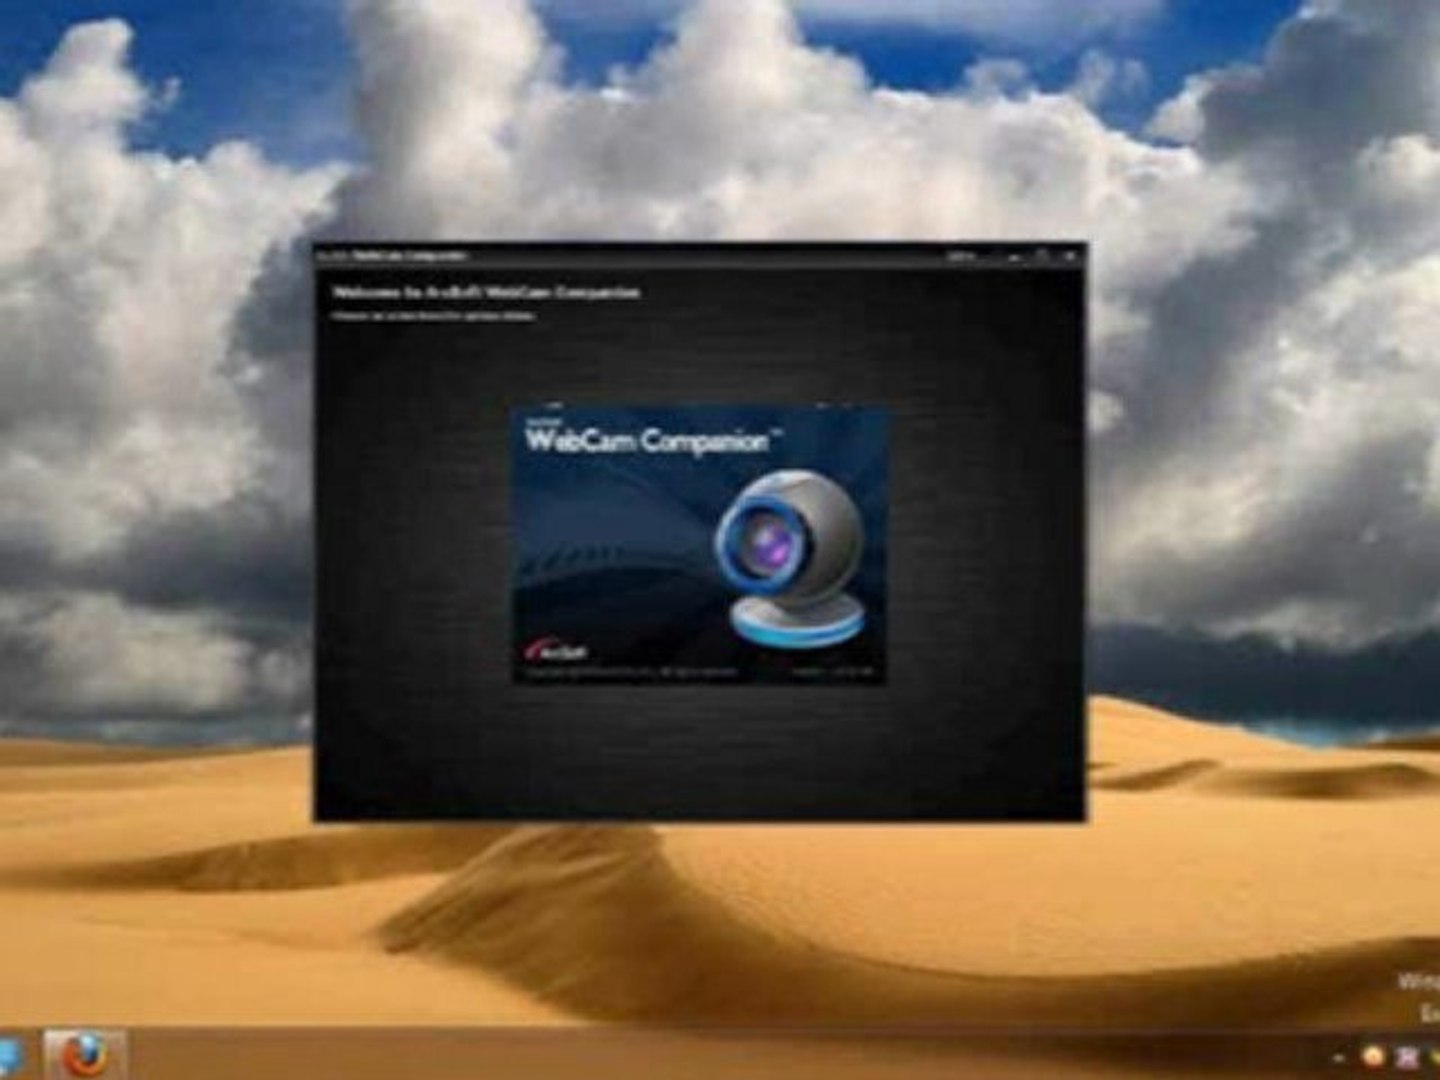 ArcSoft WebCam Companion 4.0 Serial Key [Expires 2015] - video Dailymotion